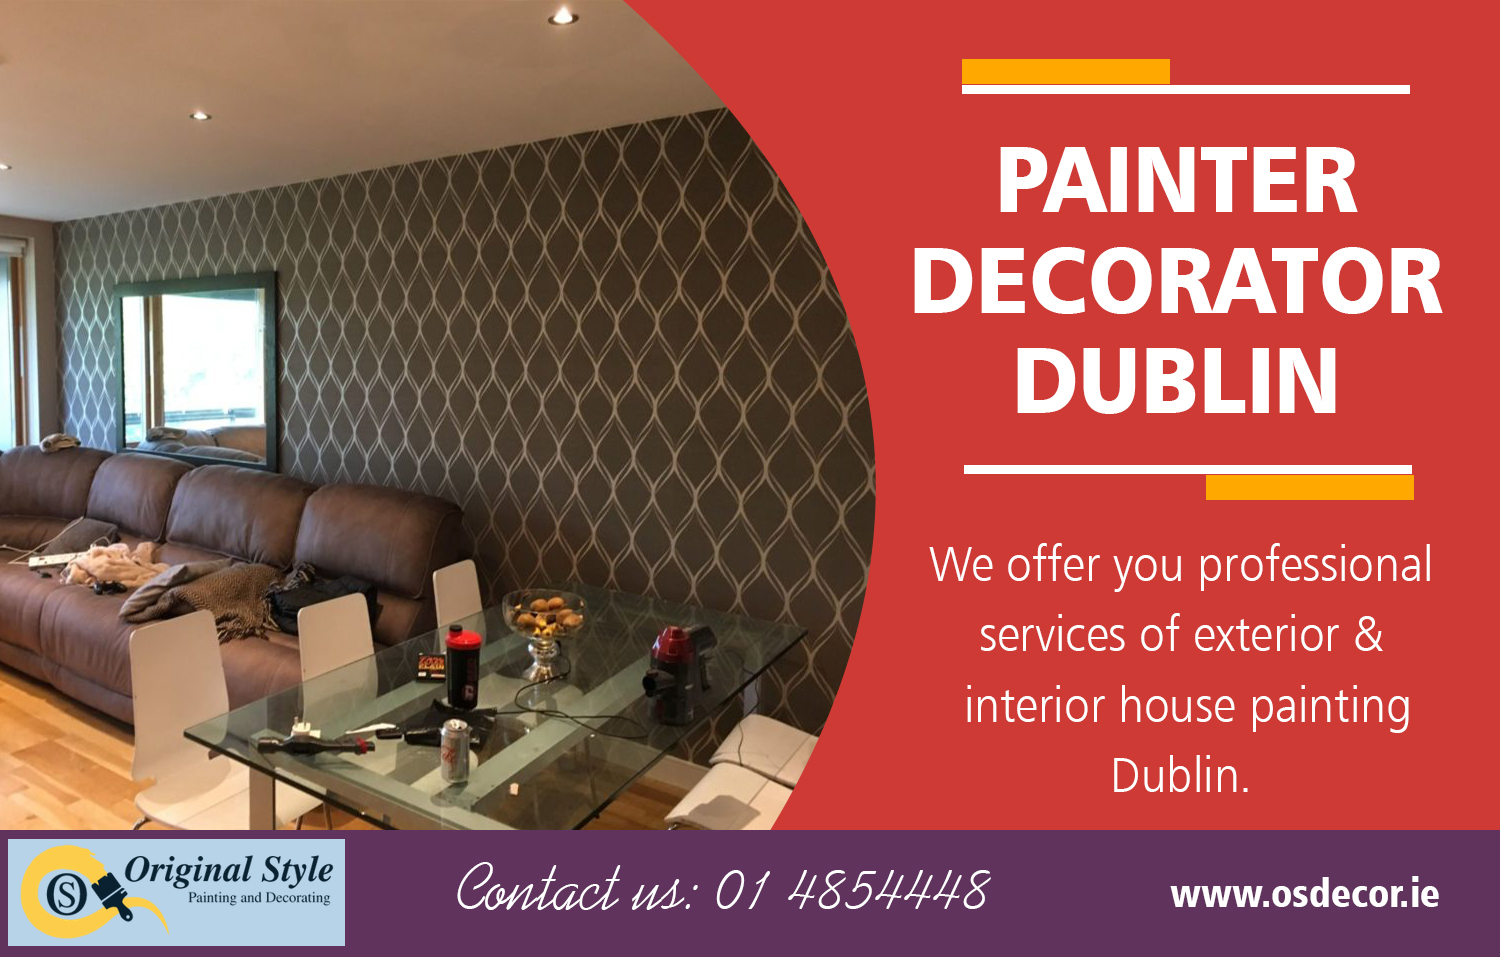 Painter Decorator Dublin